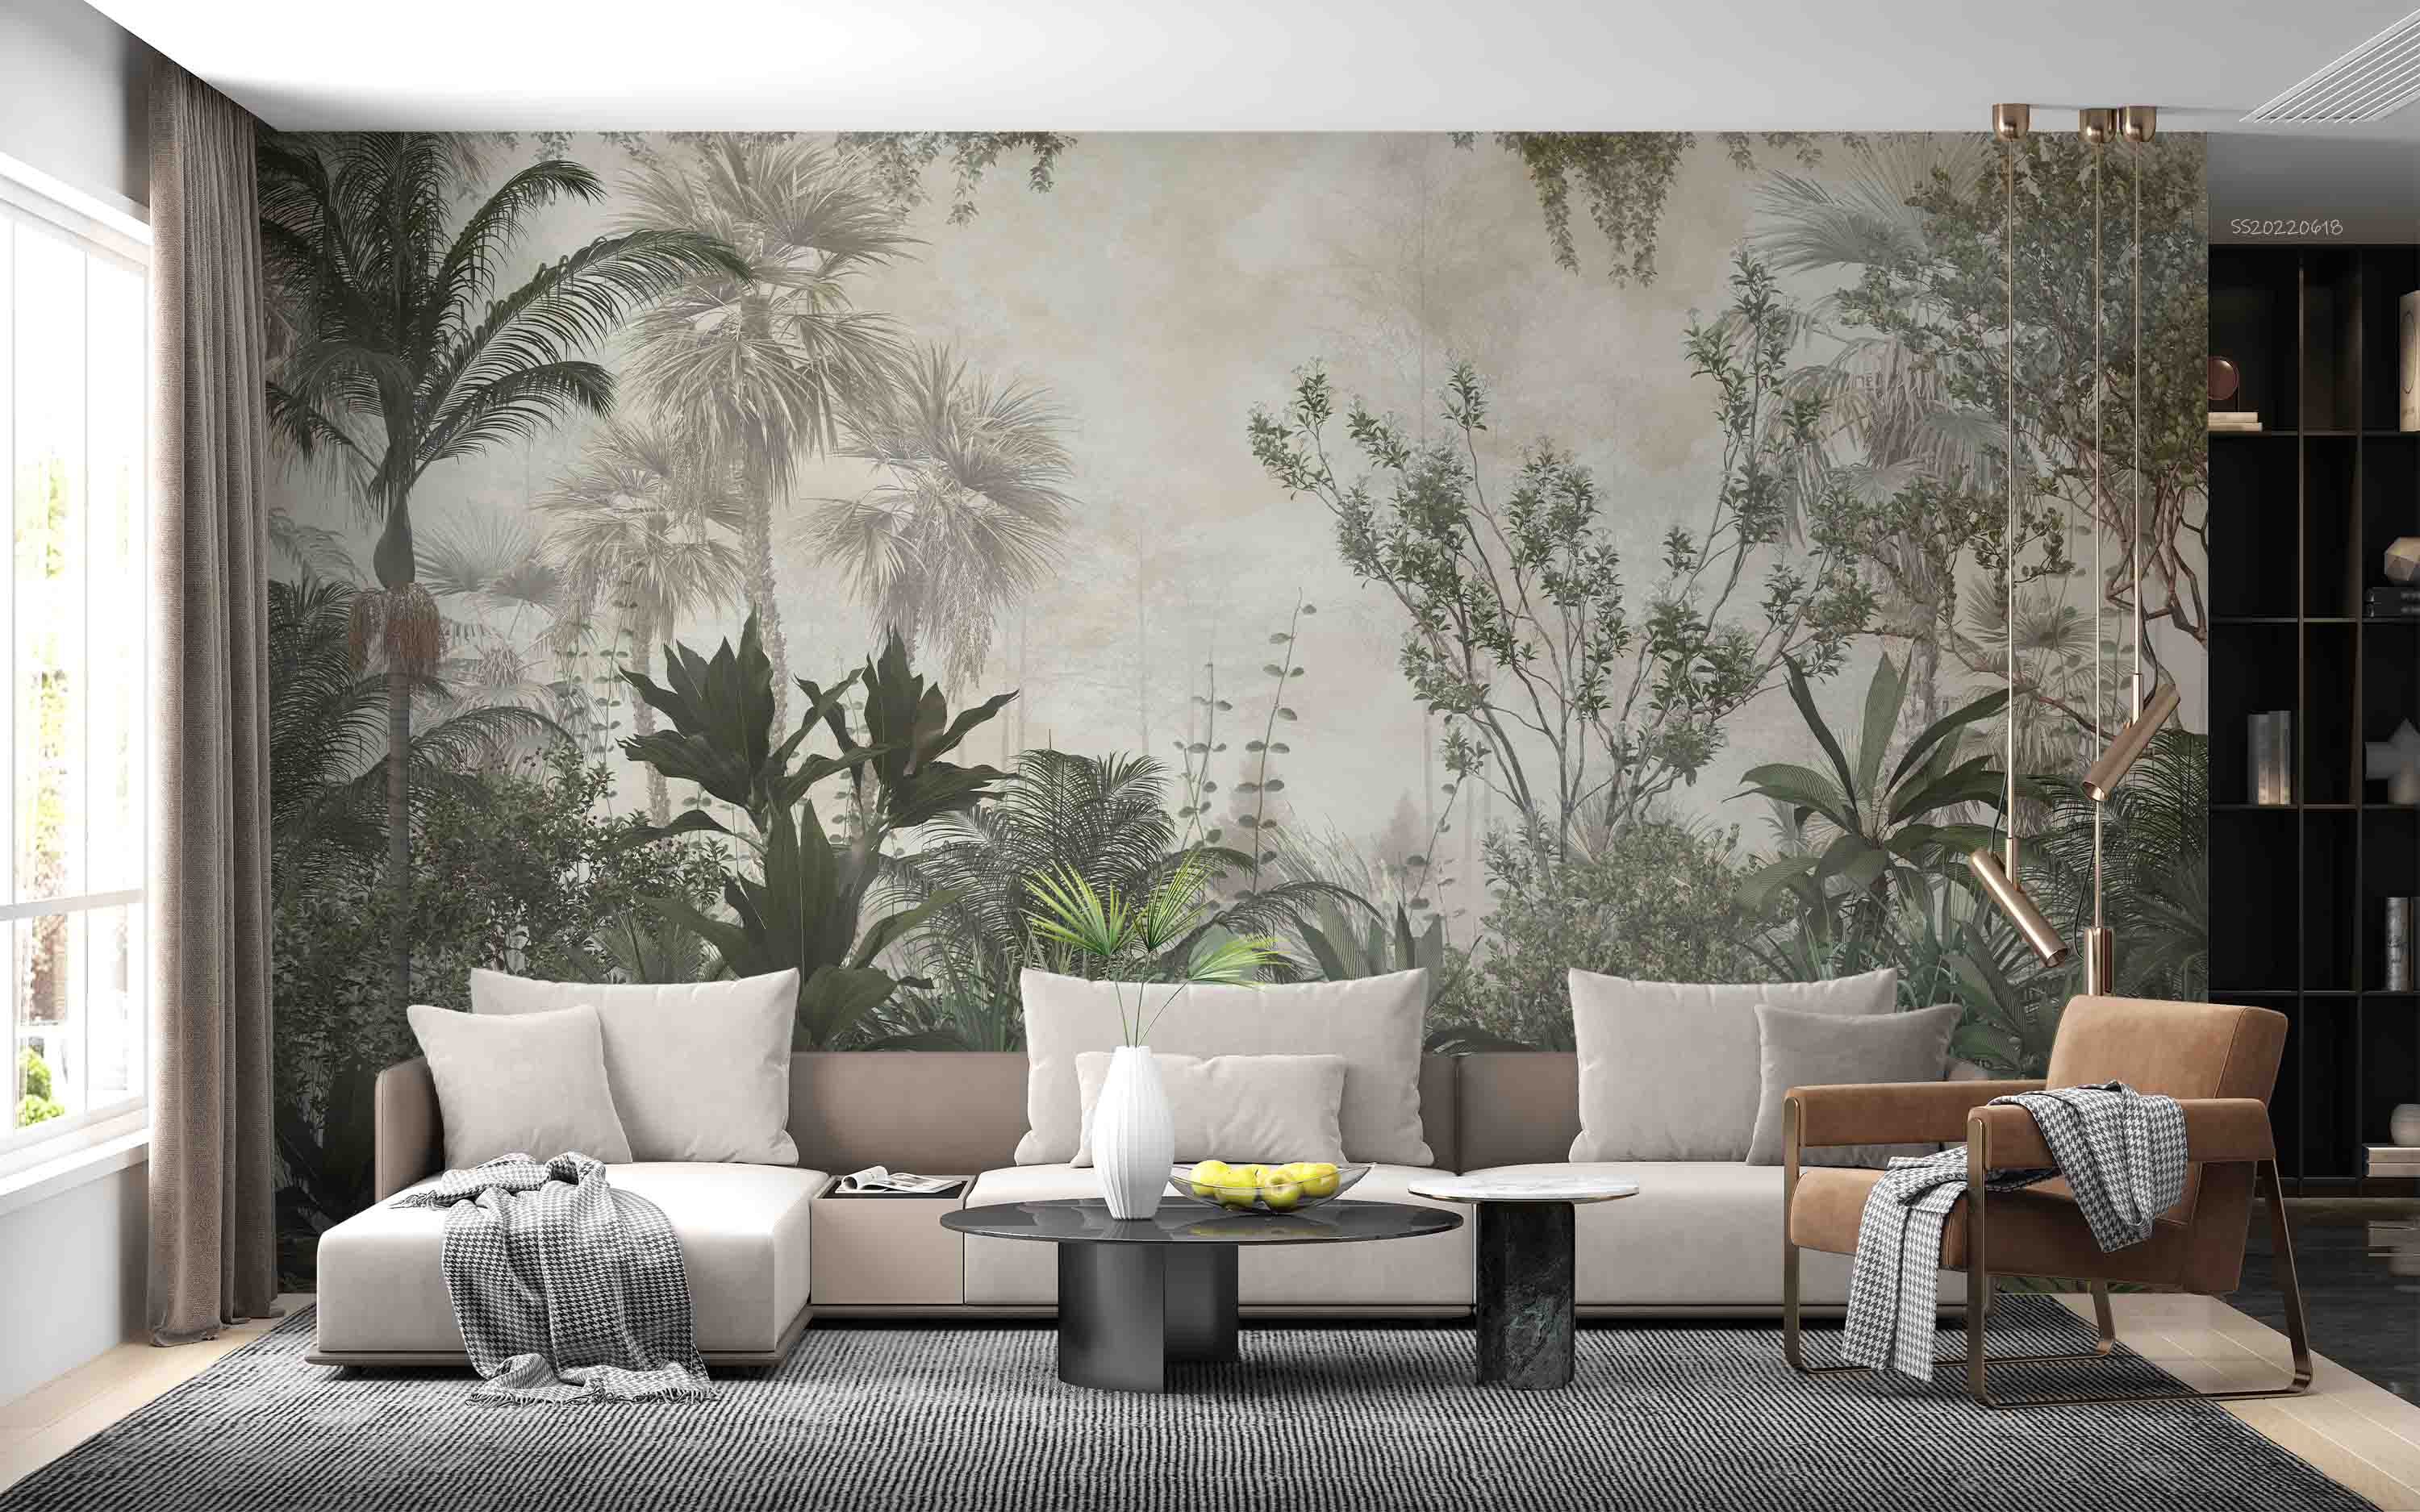 3D Vintage Tropical Jungle Trees Wall Mural Wallpaper GD 752- Jess Art Decoration